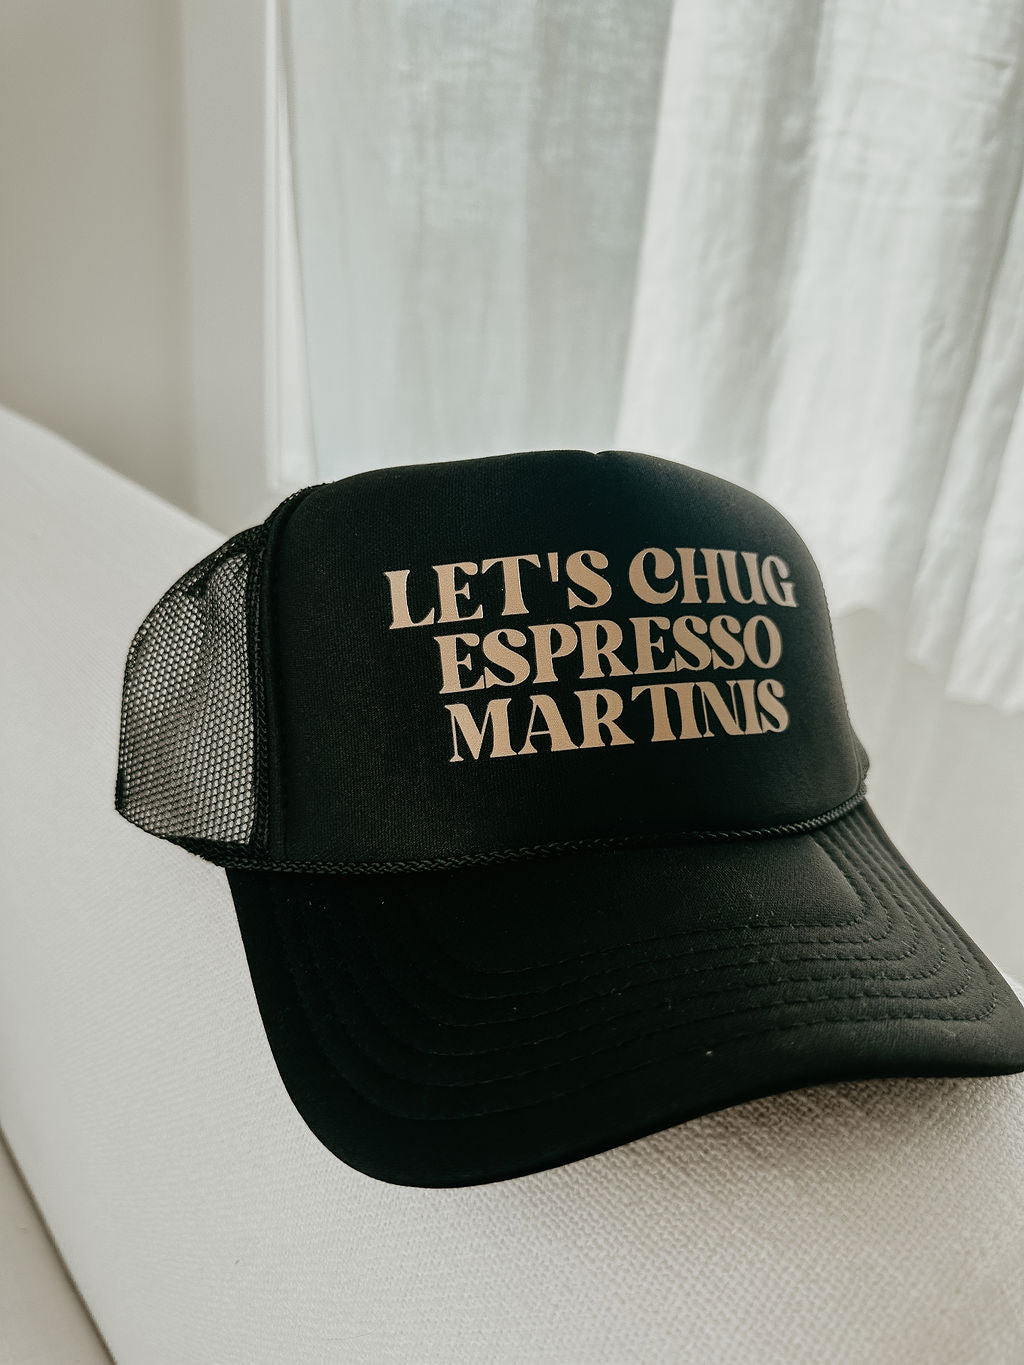 Chug Espresso Martinis Trucker Hat